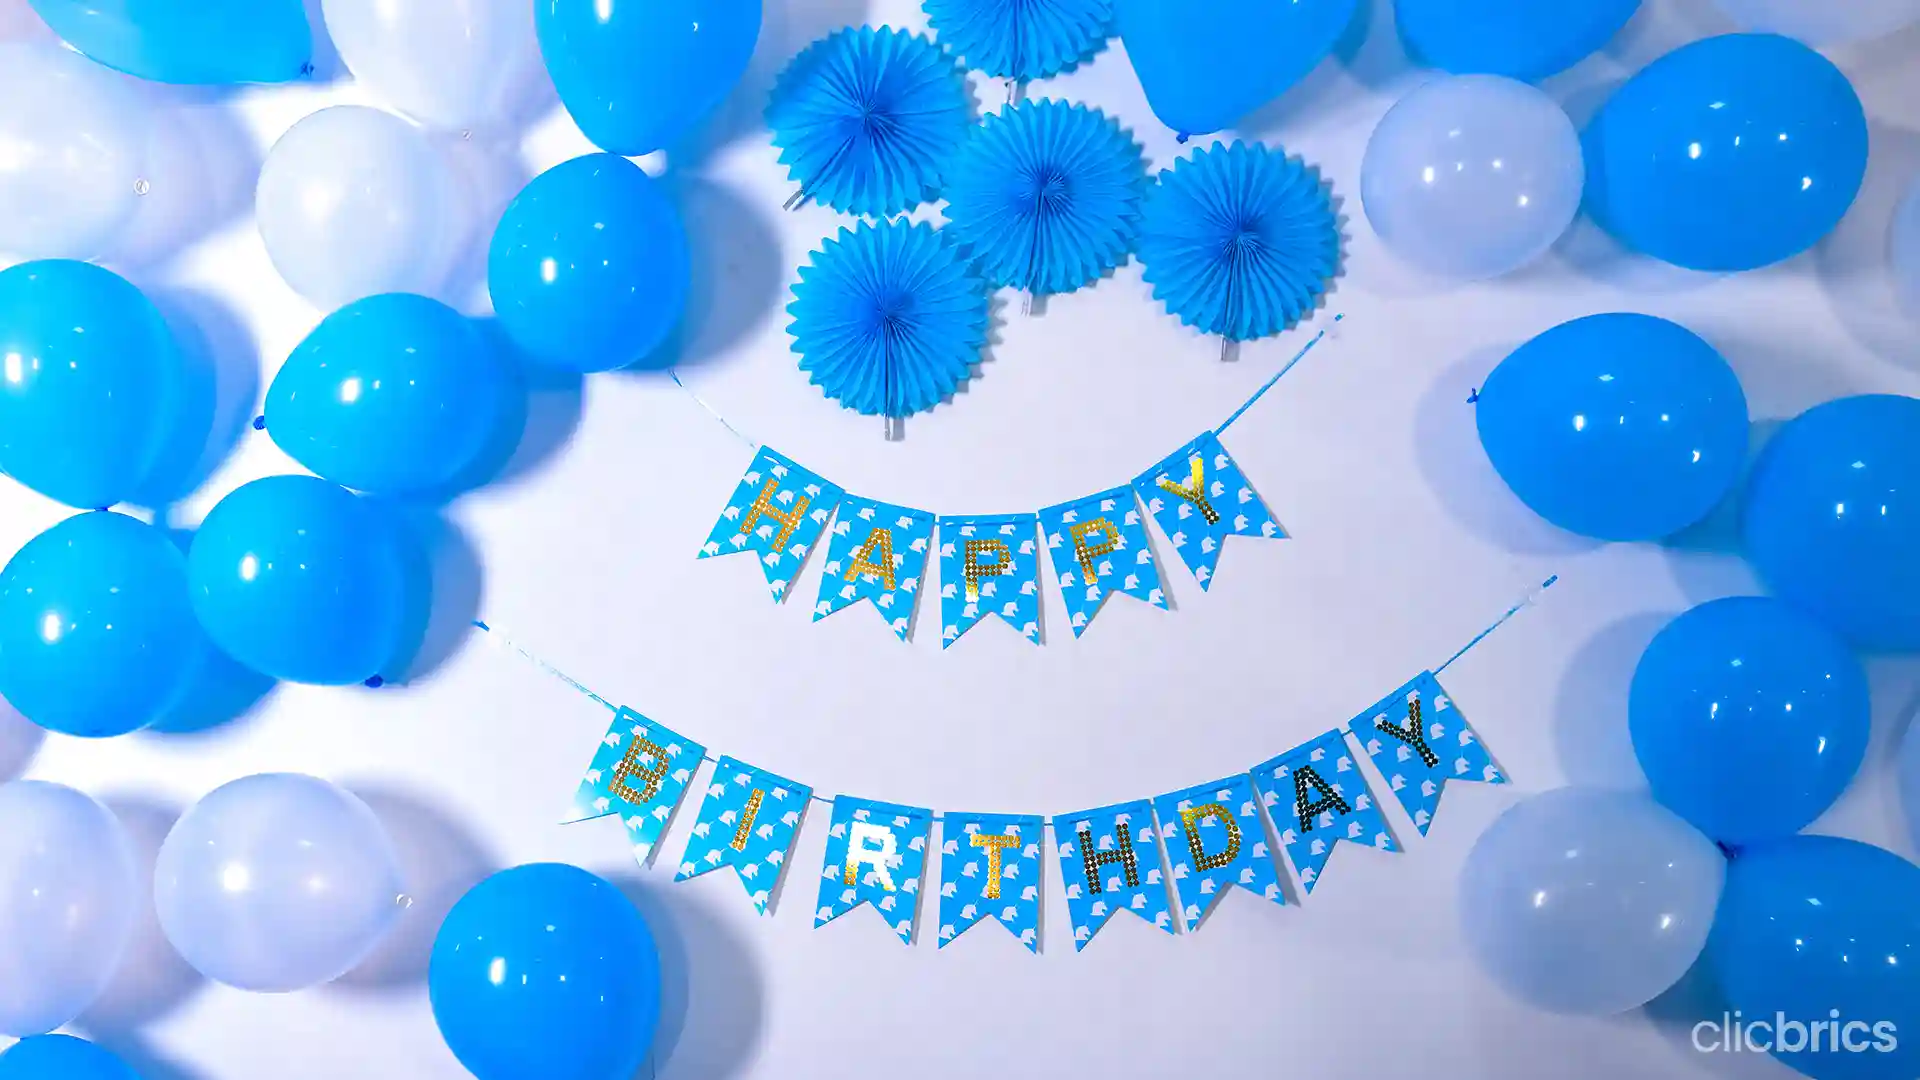 balloon decoration for birthday